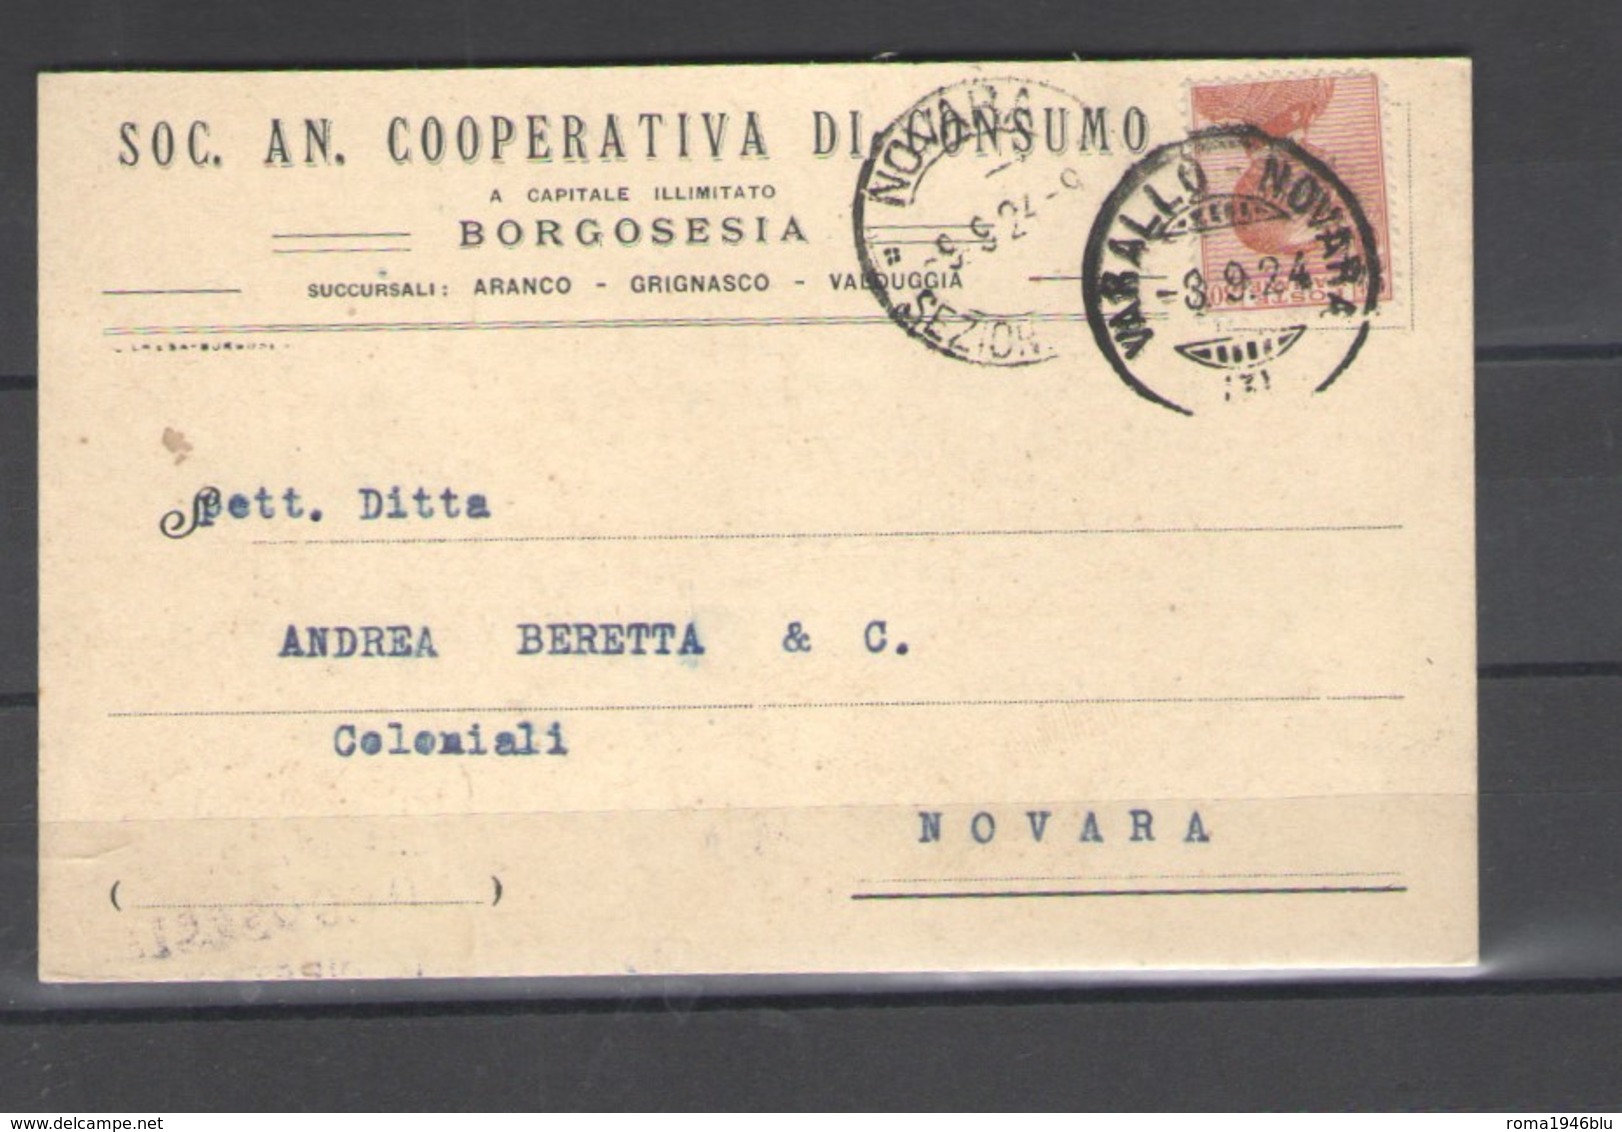 CARTOLINA PUBBLICITARIA SOCIETA' AN. COOPERATIVA DI CONSUMO BORGOSESIA - Publicité